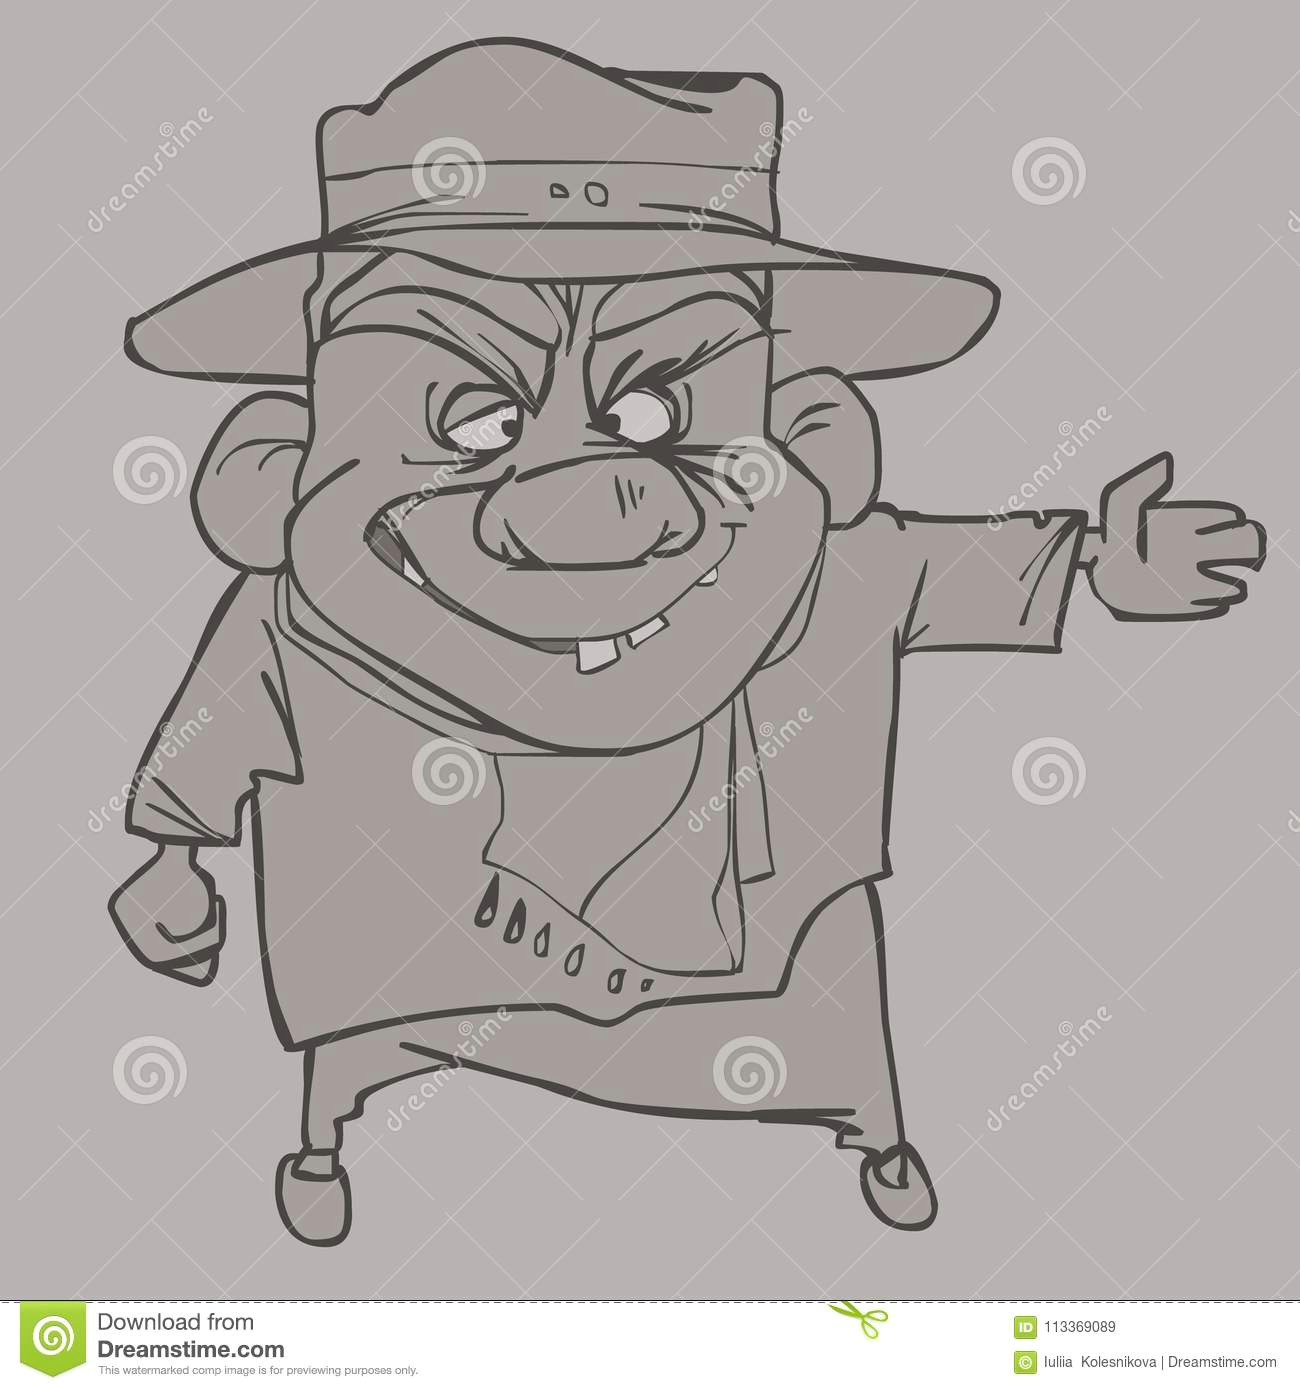 Drawing A Cartoon Cowboy Cartoon Character Smiling Man In A Hat Stock Vector Illustration